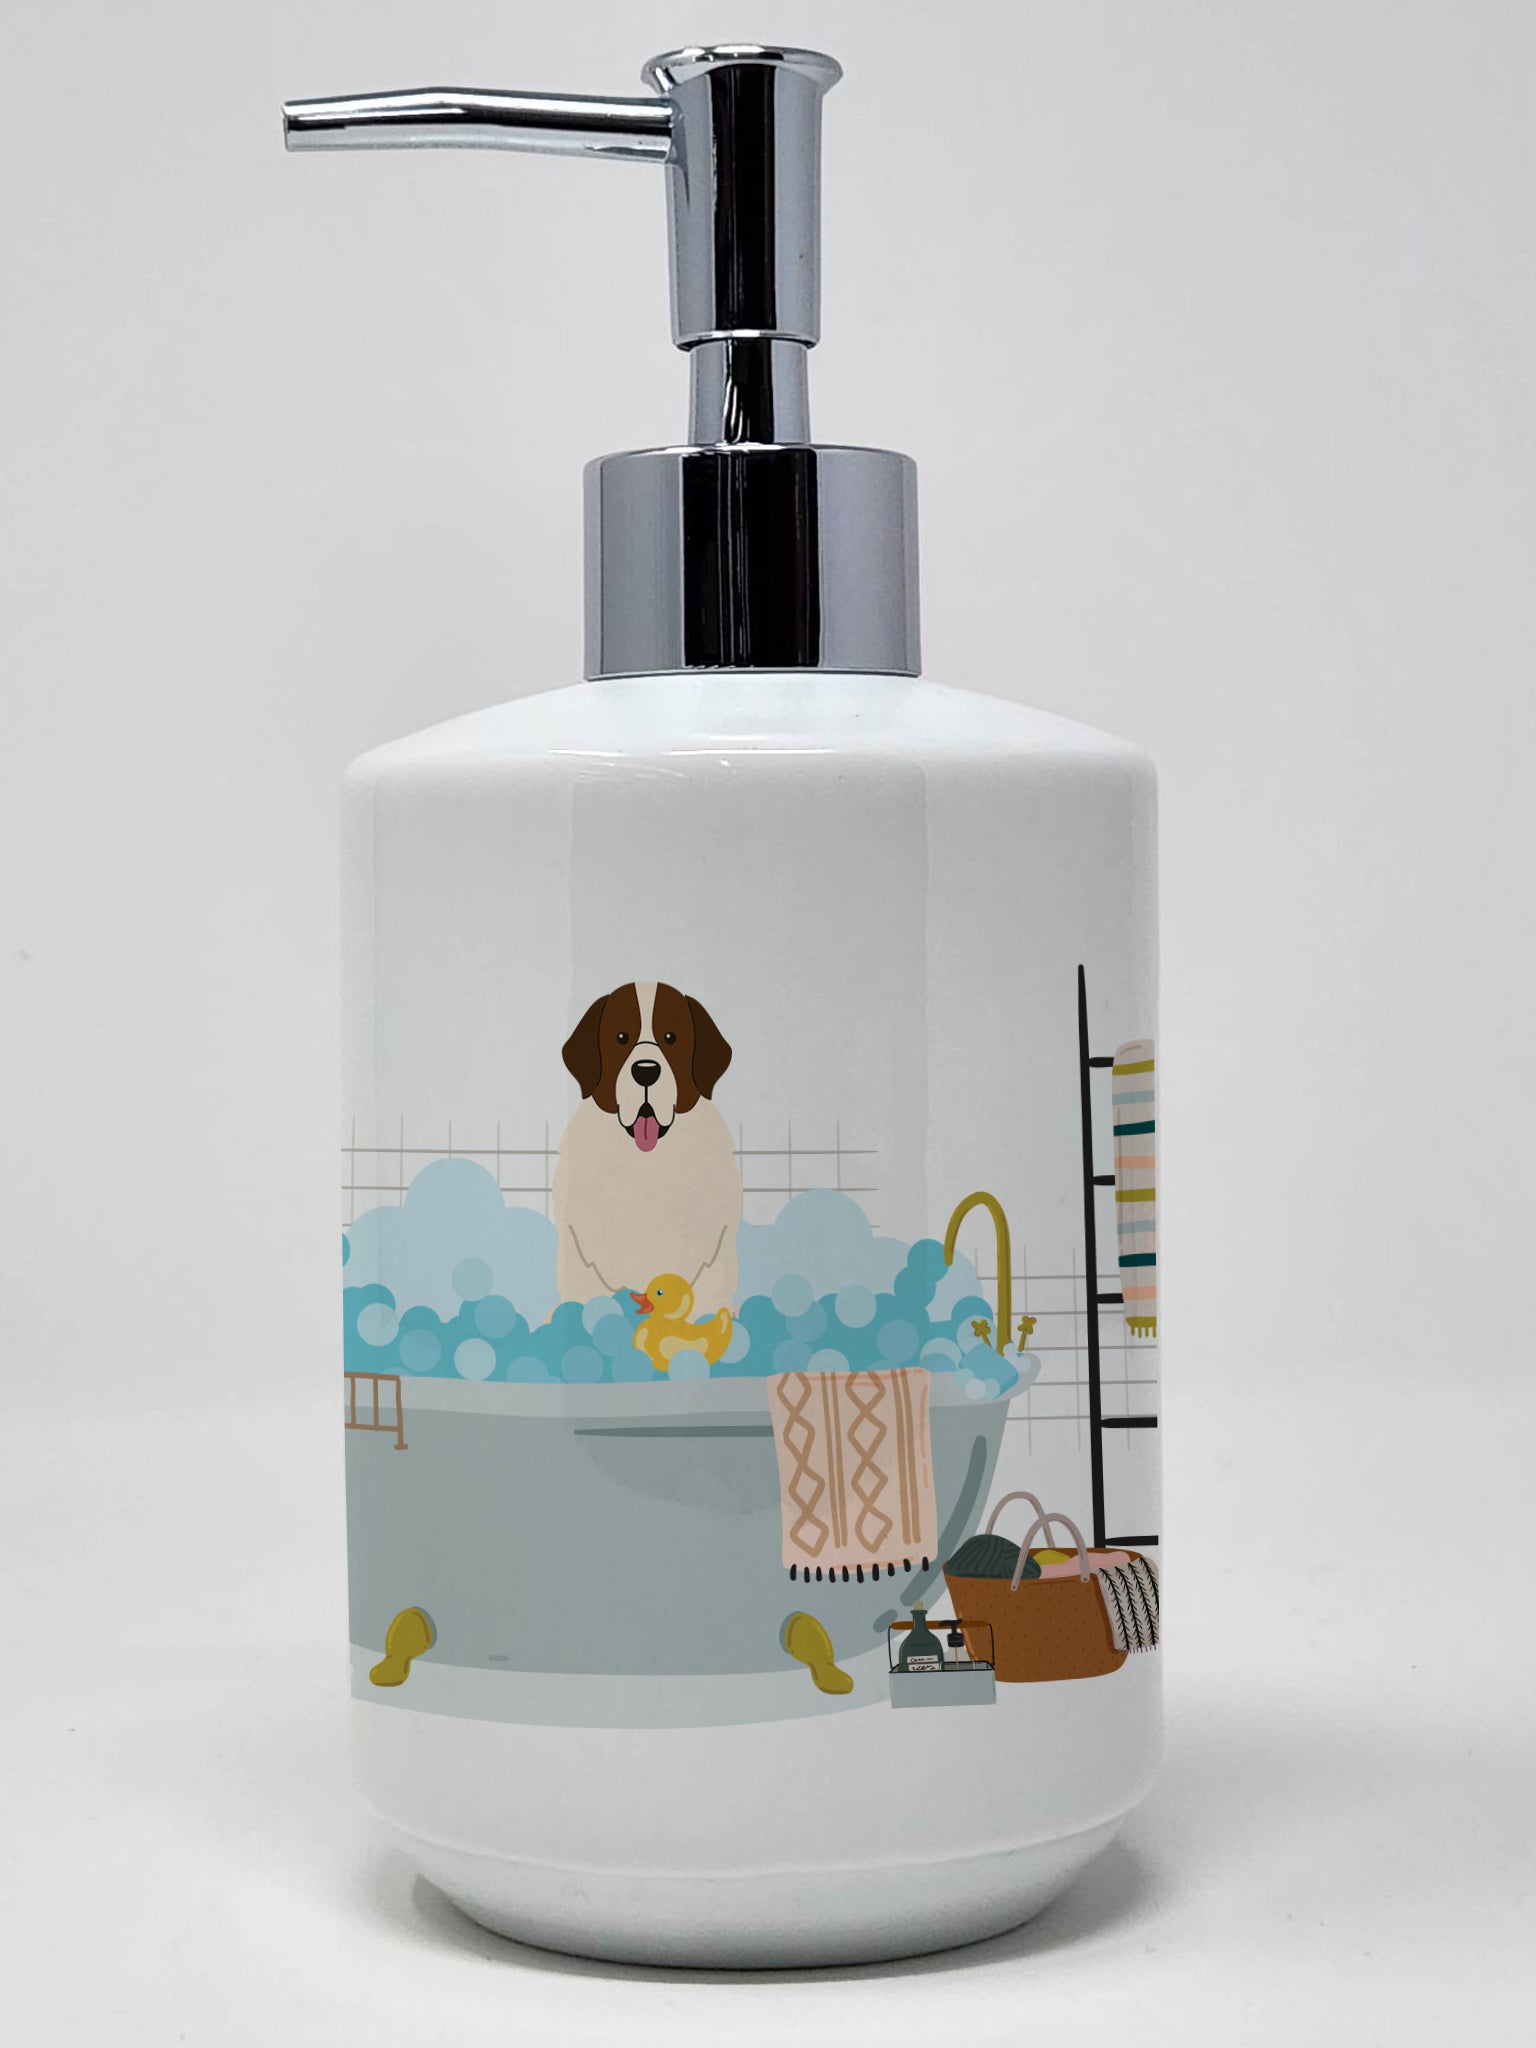 Buy this Moscow Watchdog in Bathtub Ceramic Soap Dispenser